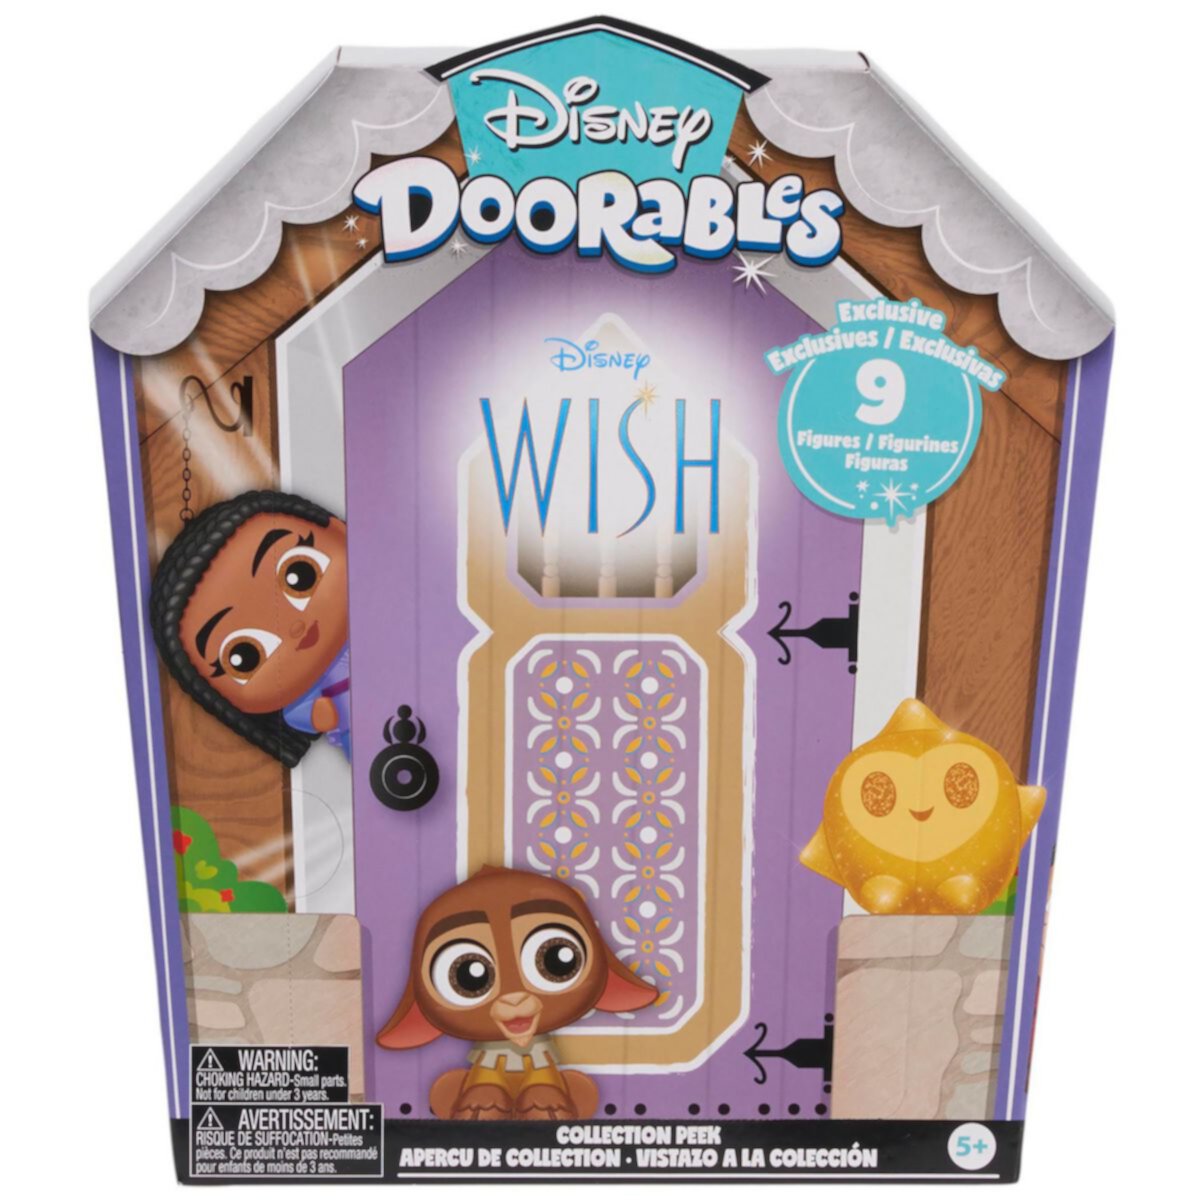 Коллекционный набор Just Play Doorables Wish Just Play